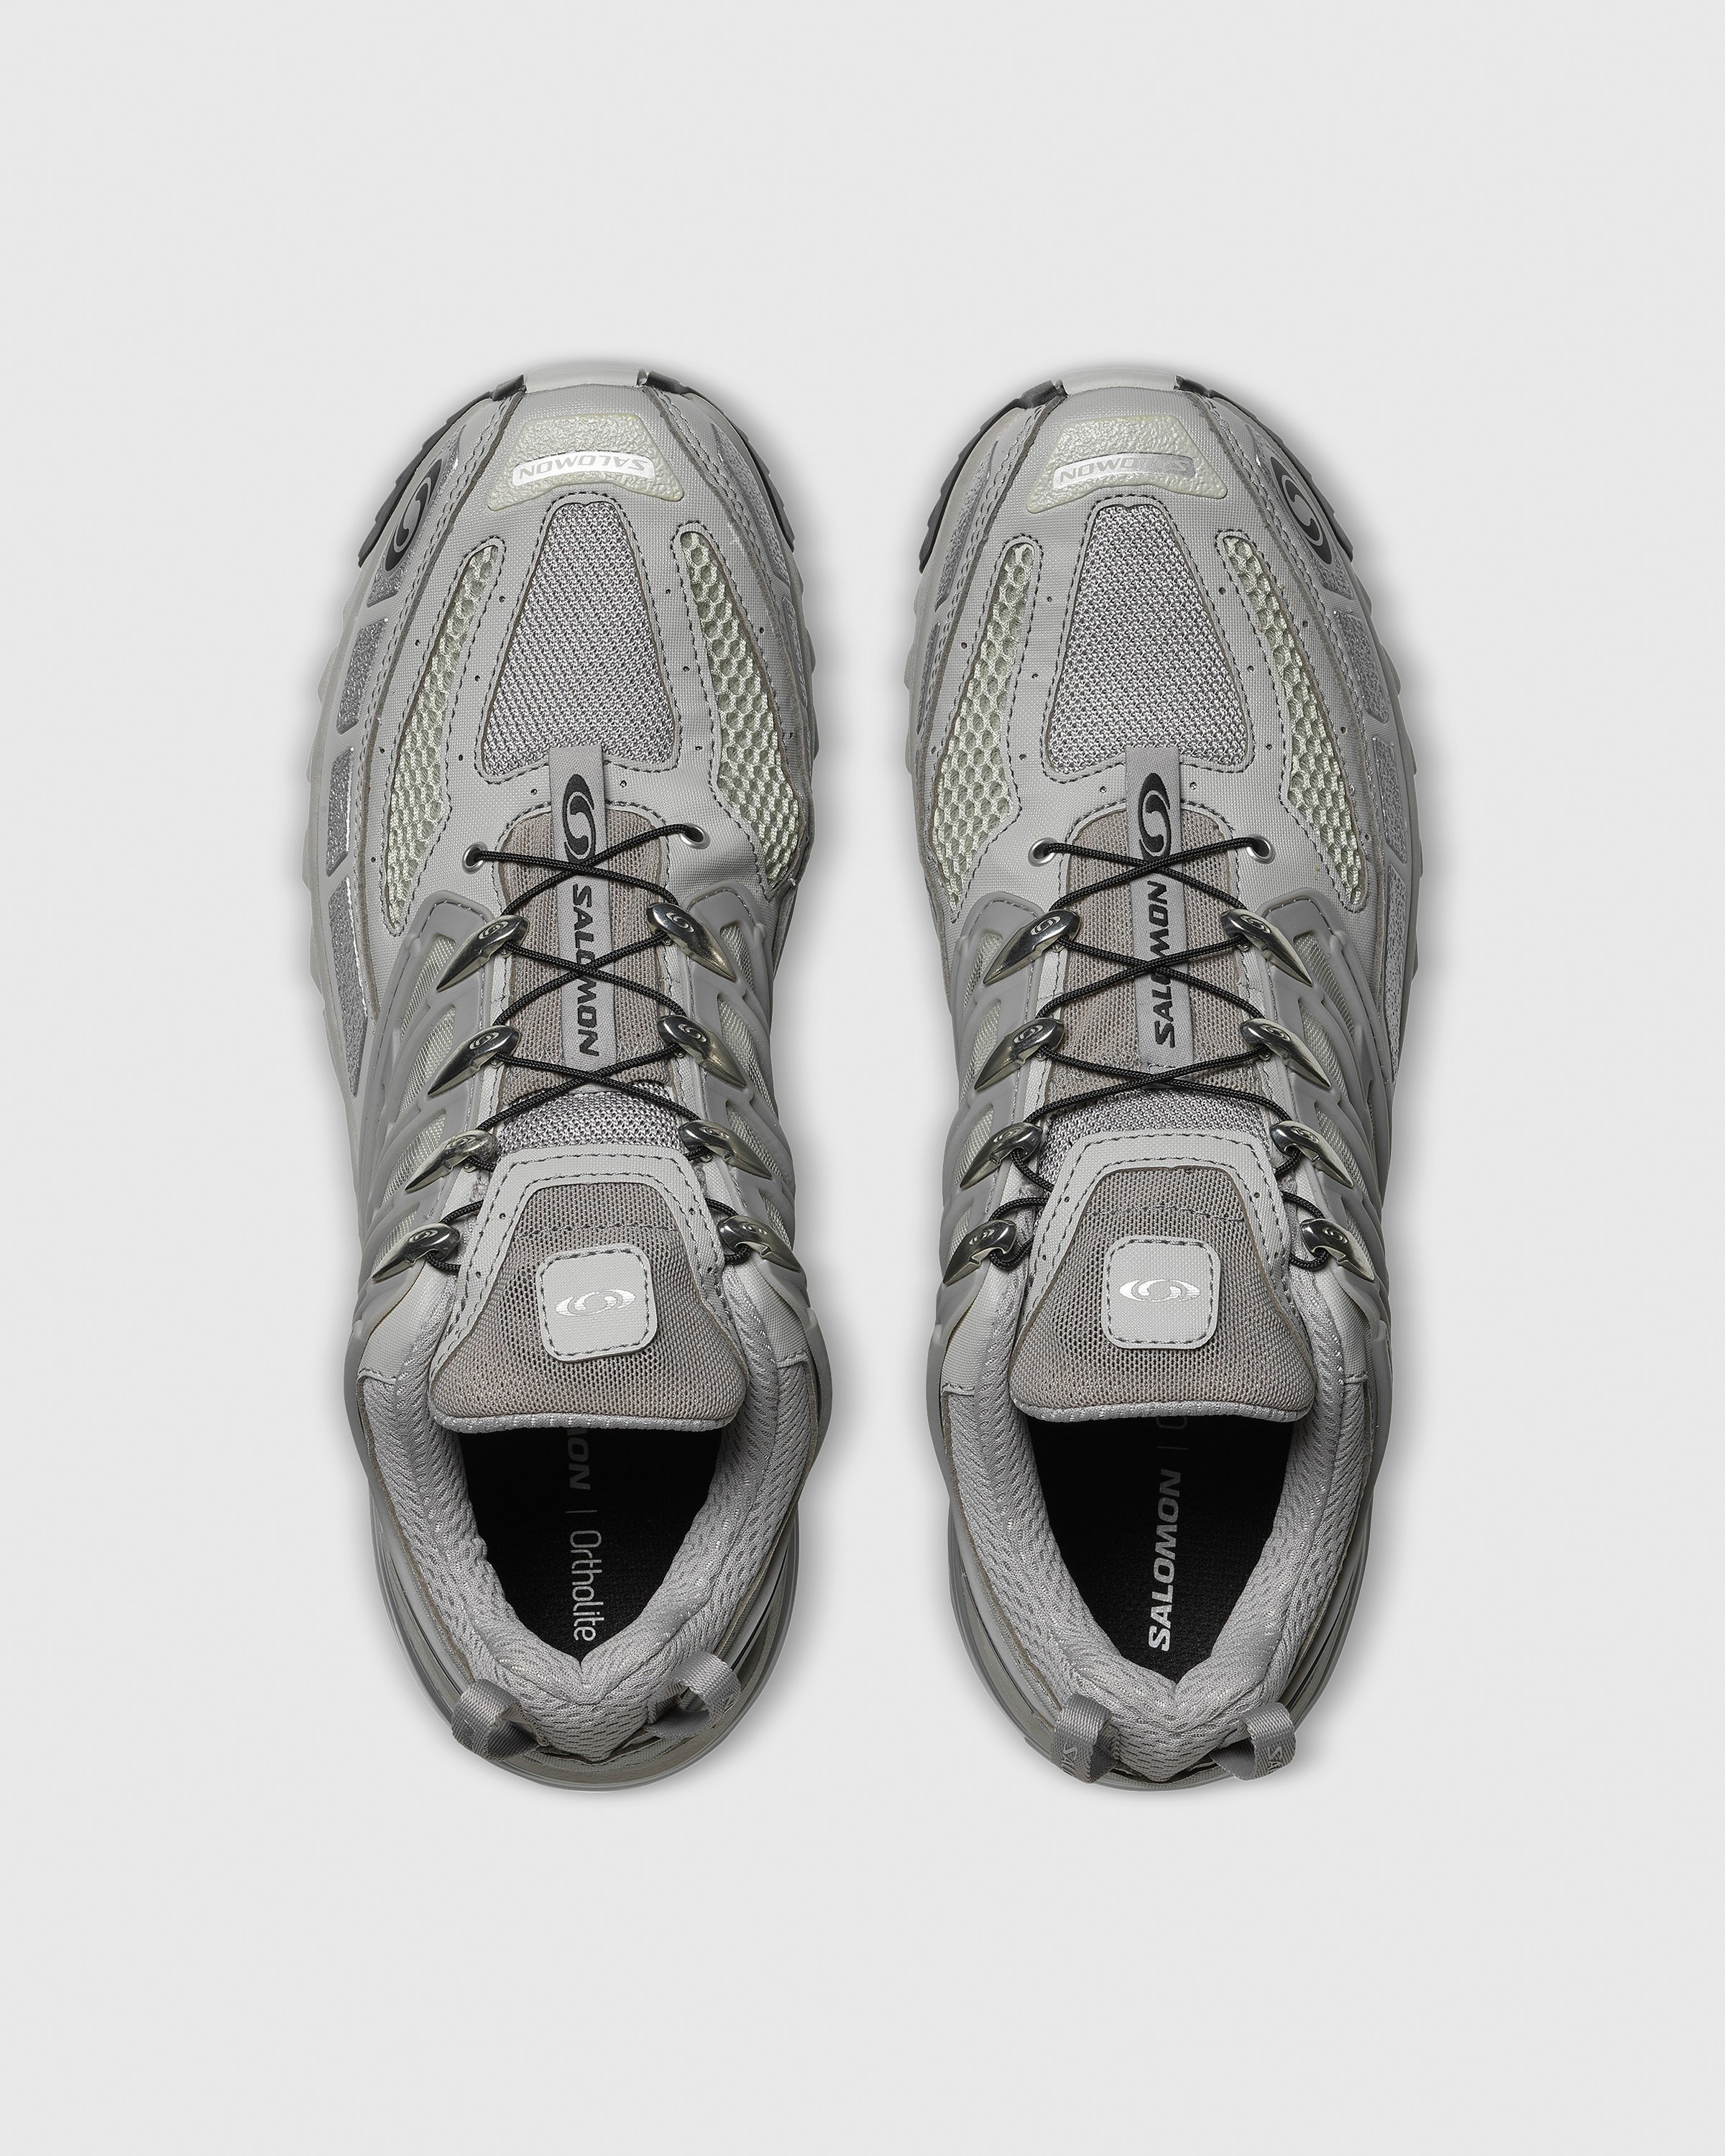 Salomon - ACS PRO Metal/Ghost Gray/Silver Metallic X - Footwear - Silver - Image 4